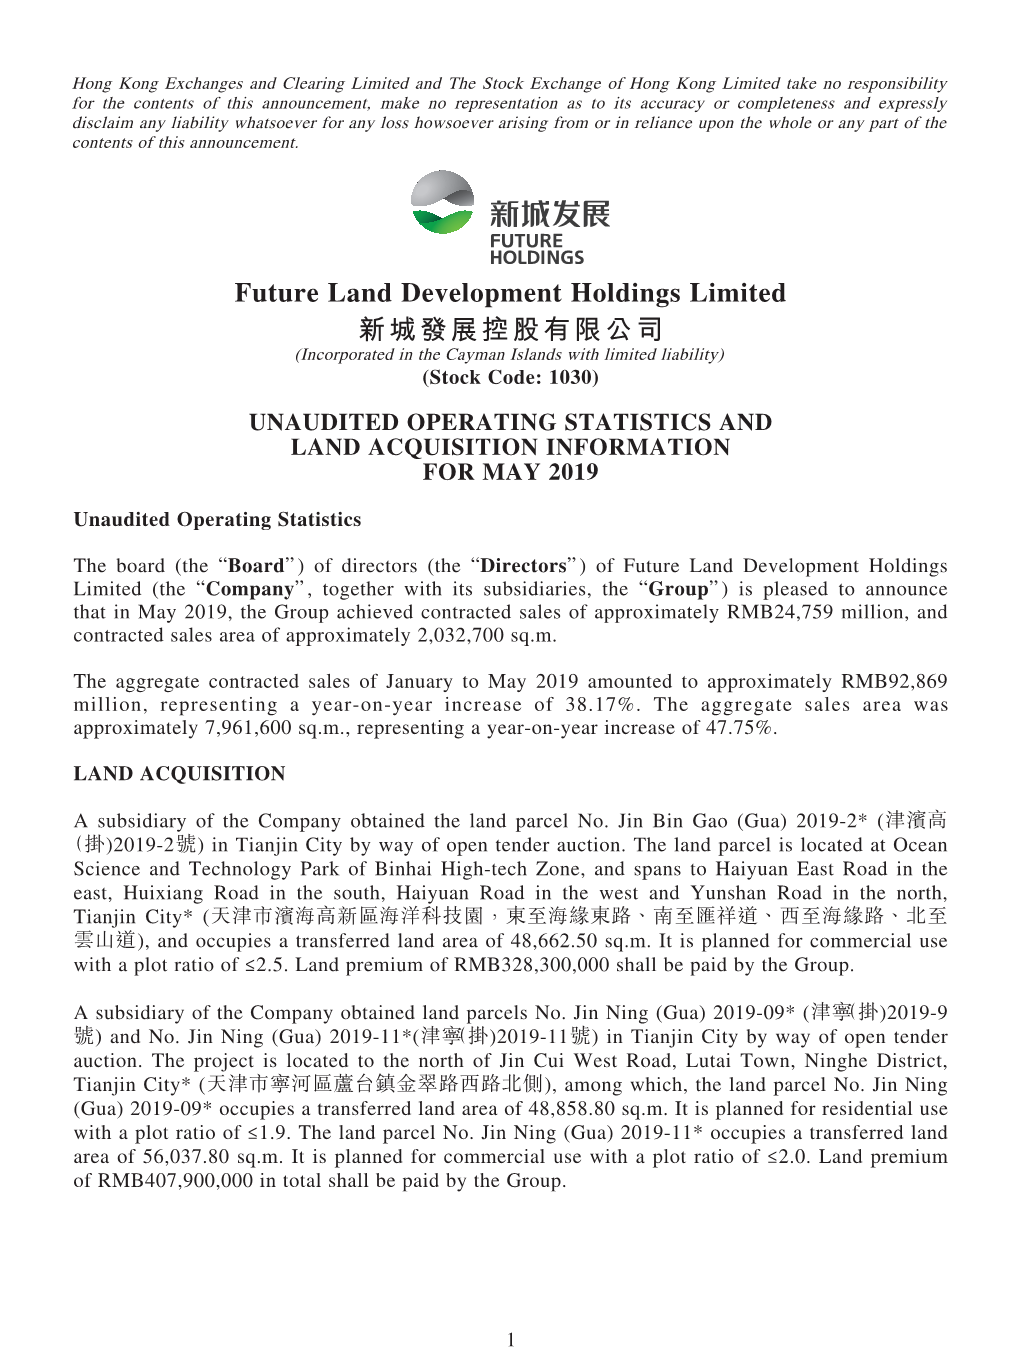 Future Land Development Holdings Limited 新城發展控股有限公司